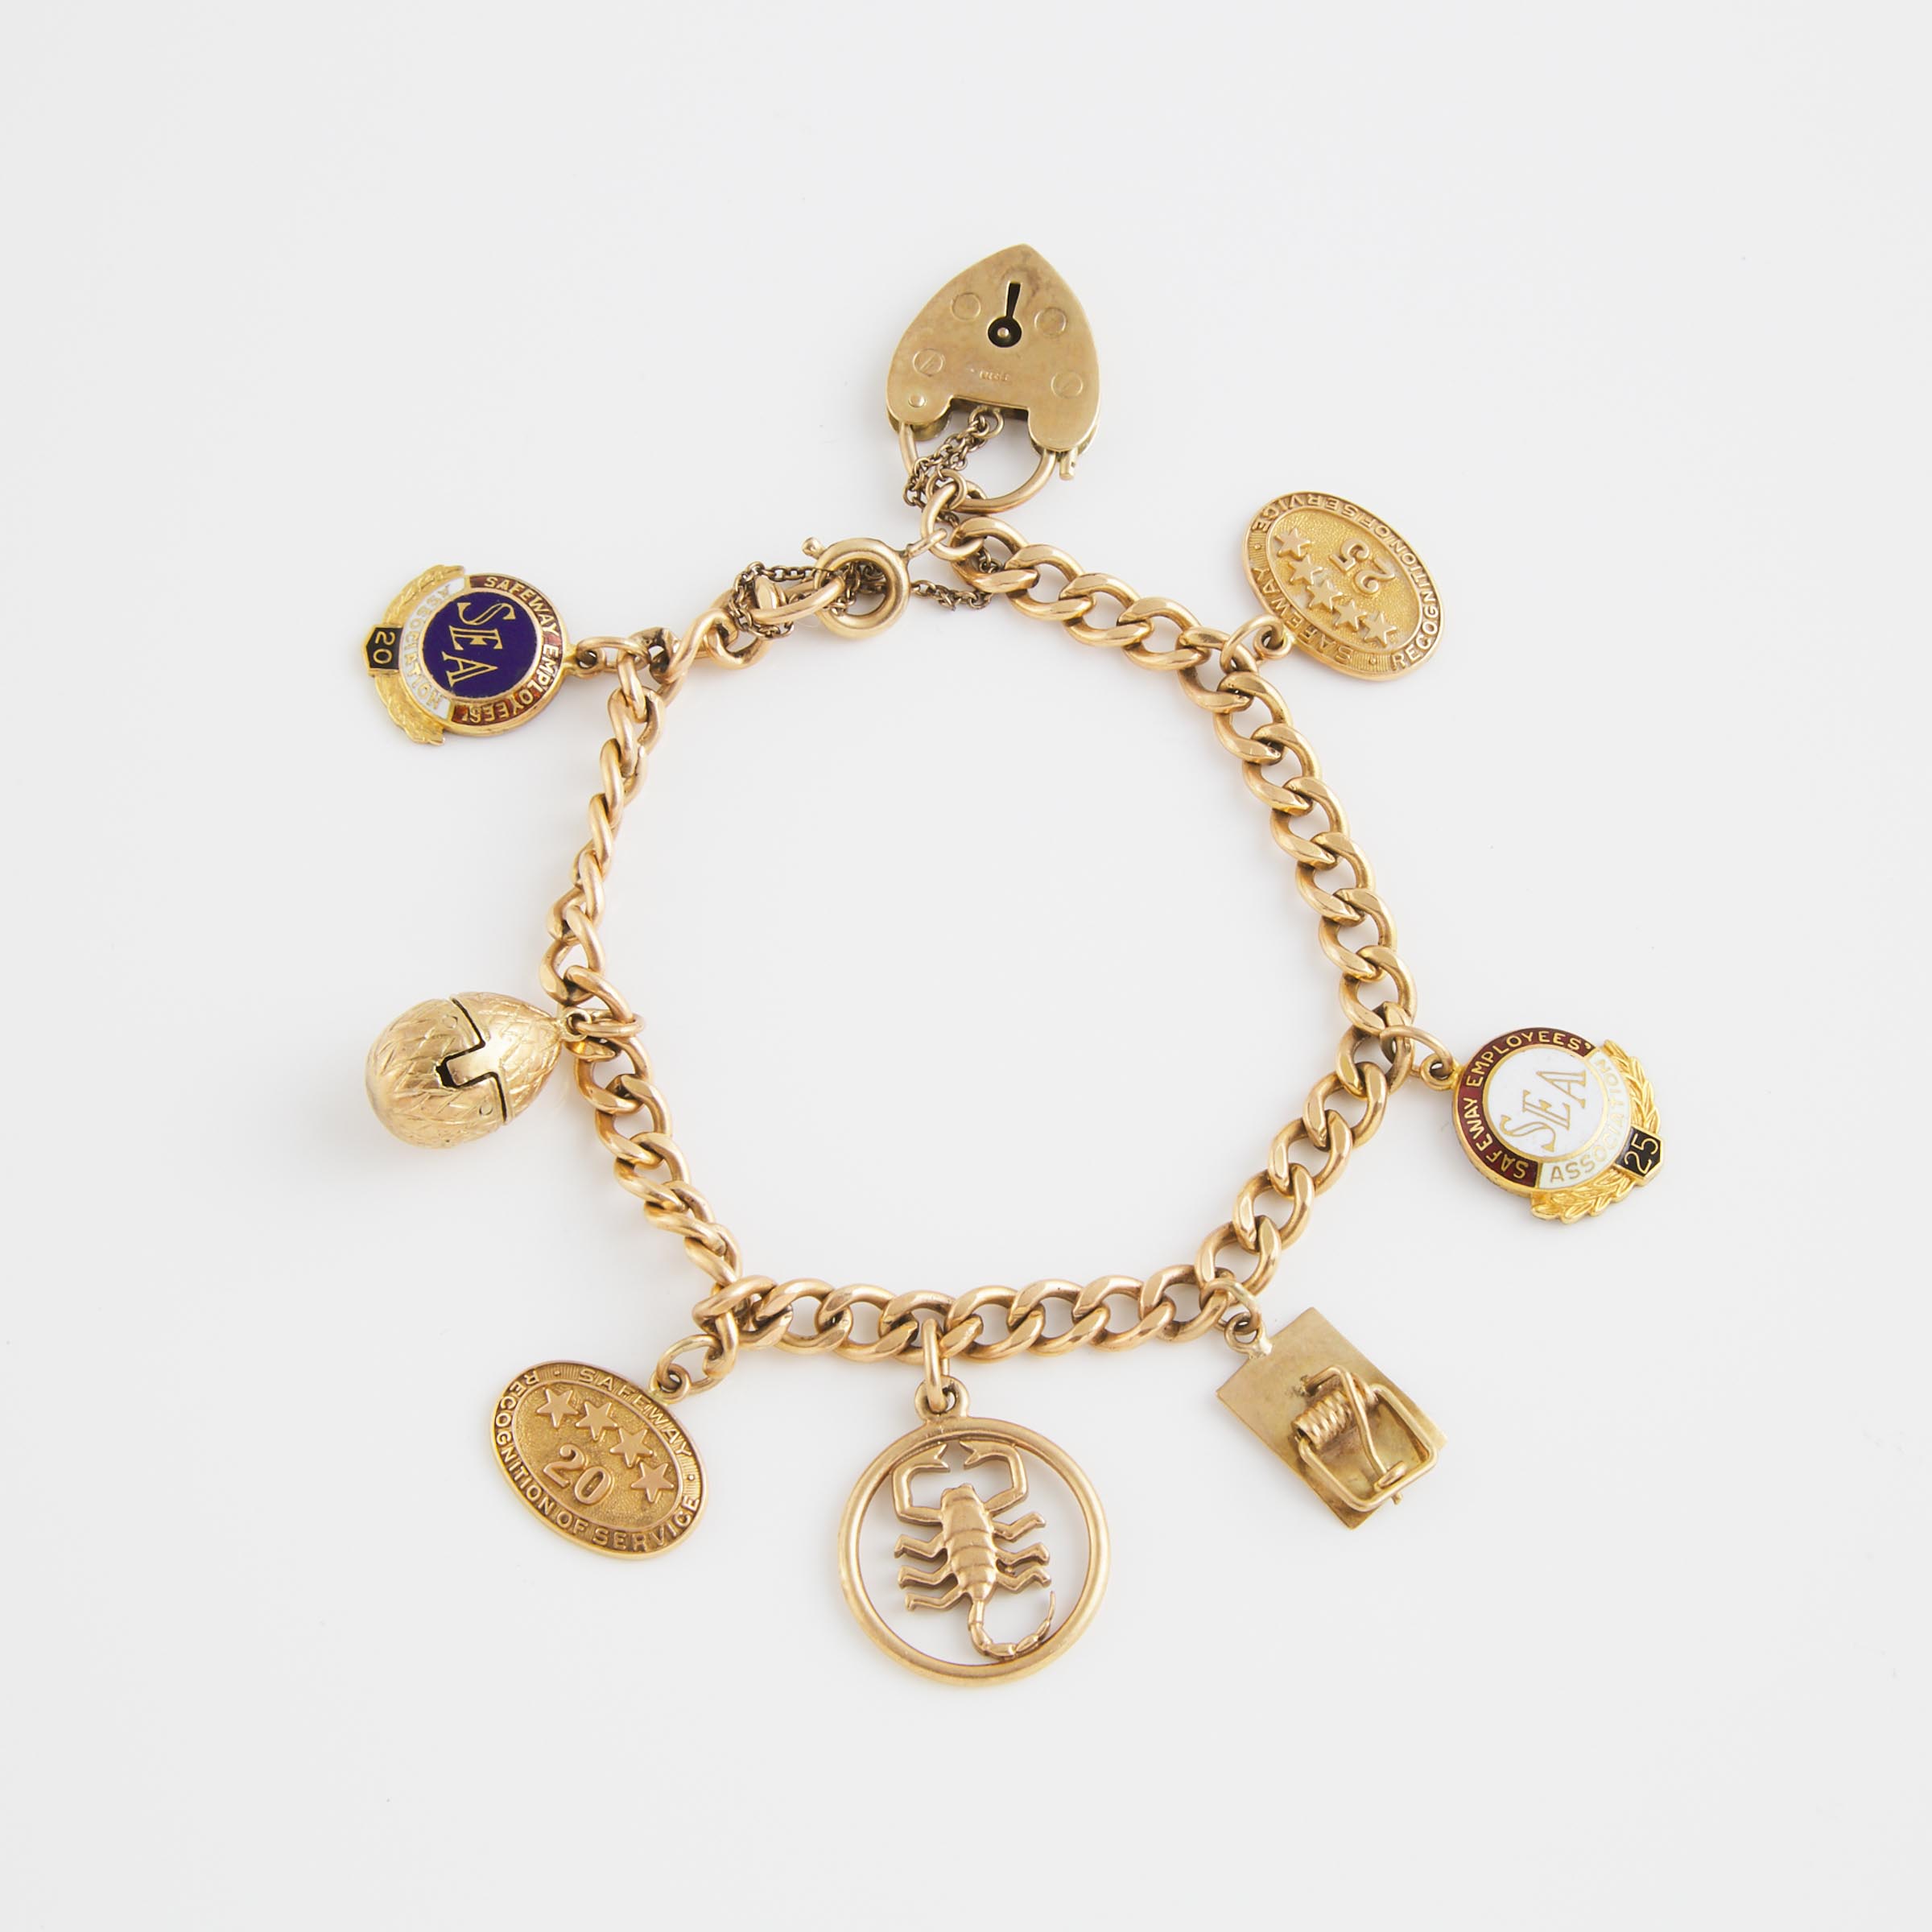 Gold And Gold-Filled Charm Bracelet 